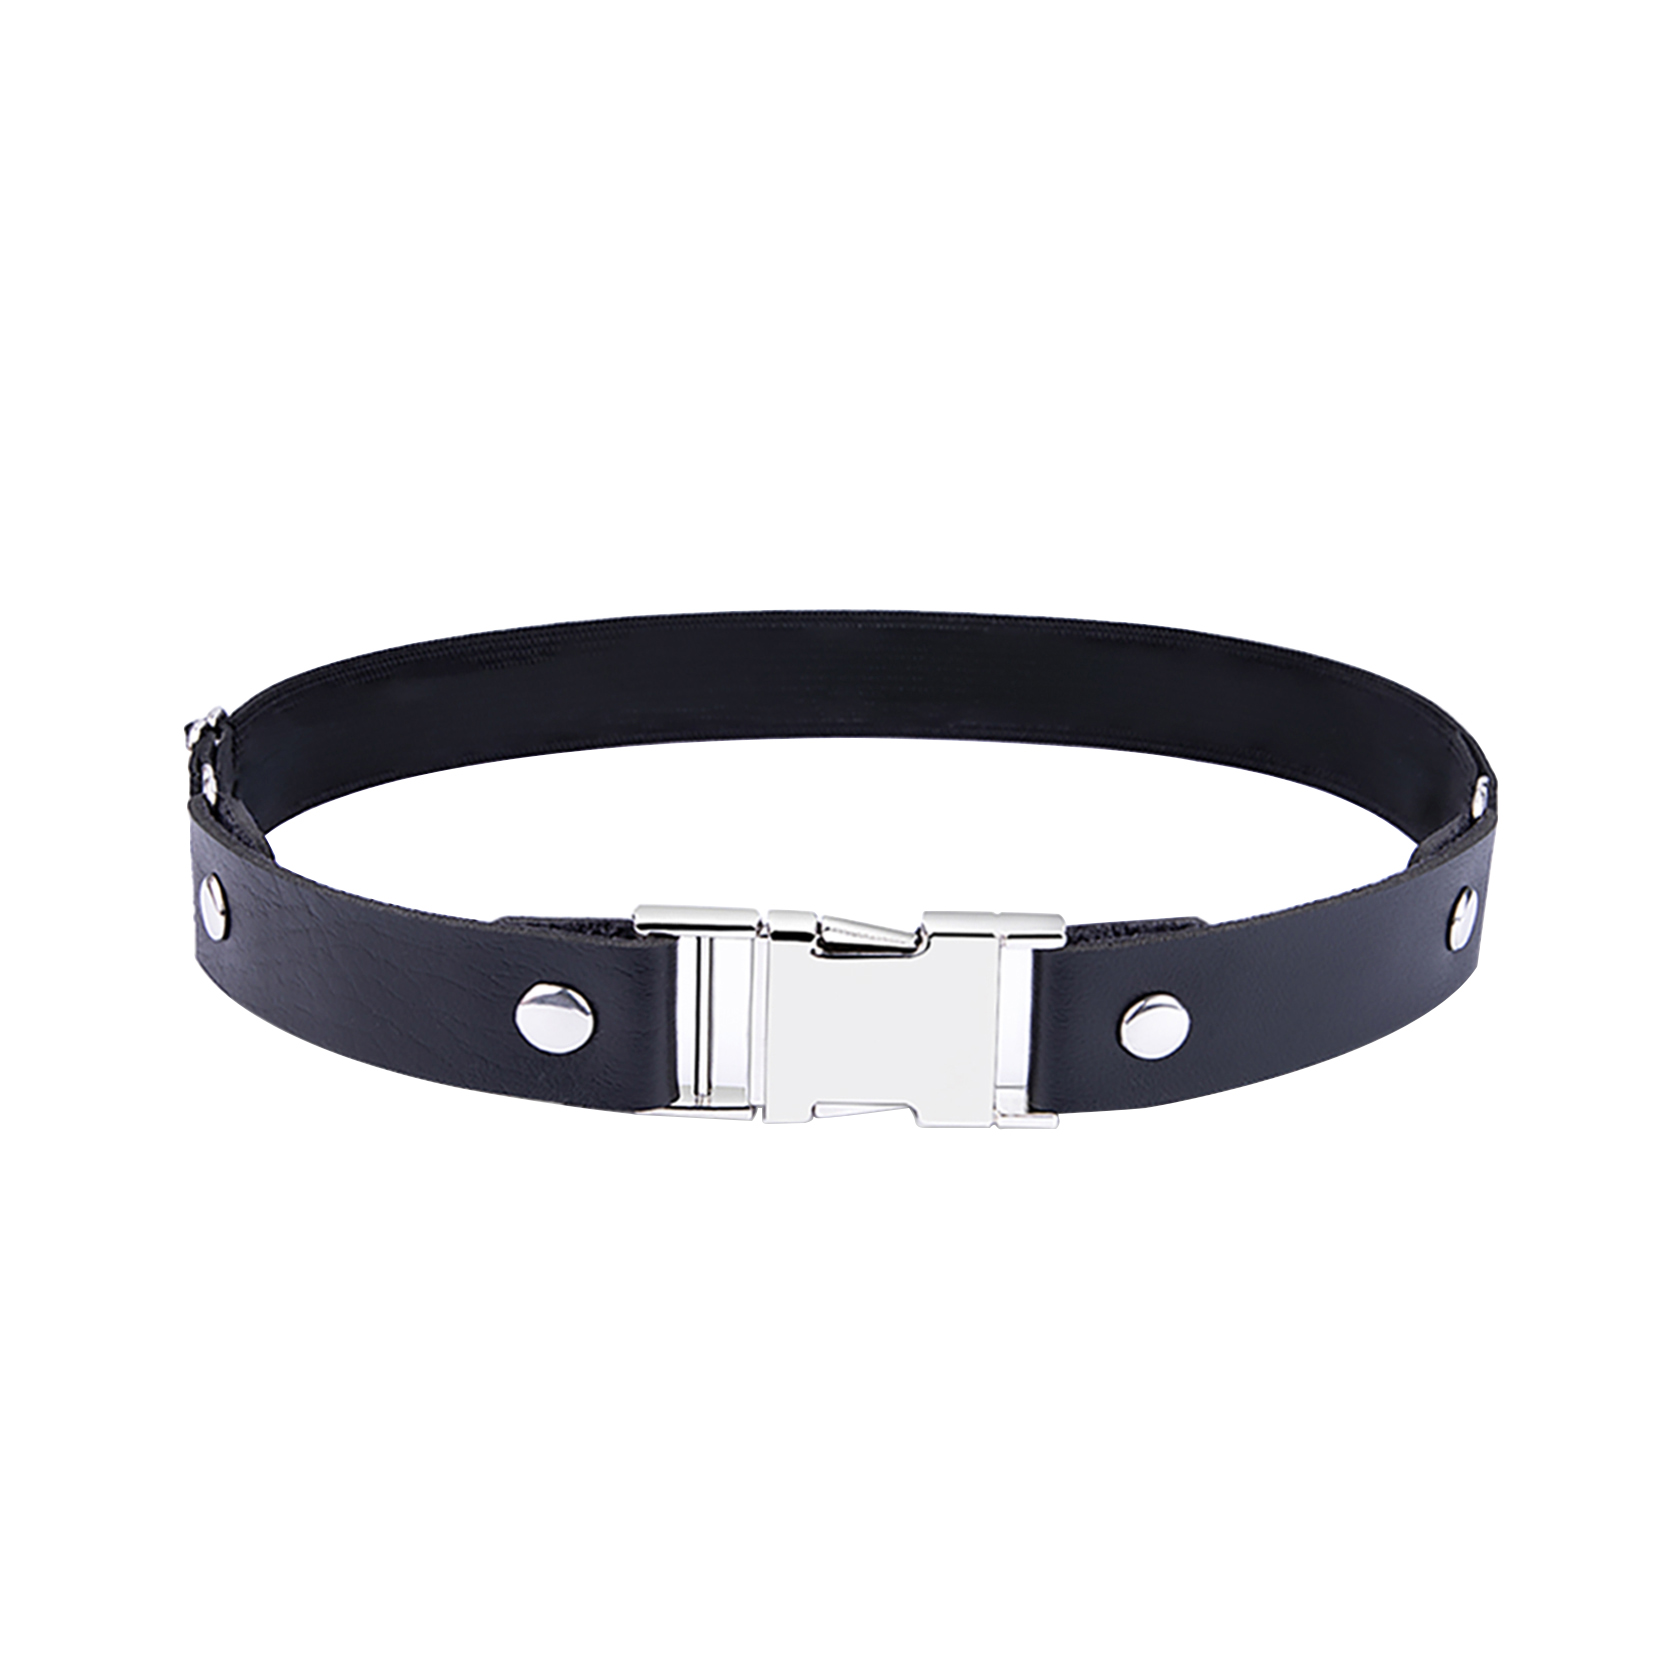 Blackhit Elastic gothic thigh ring garters alloy clasp punk harness garter belt for women